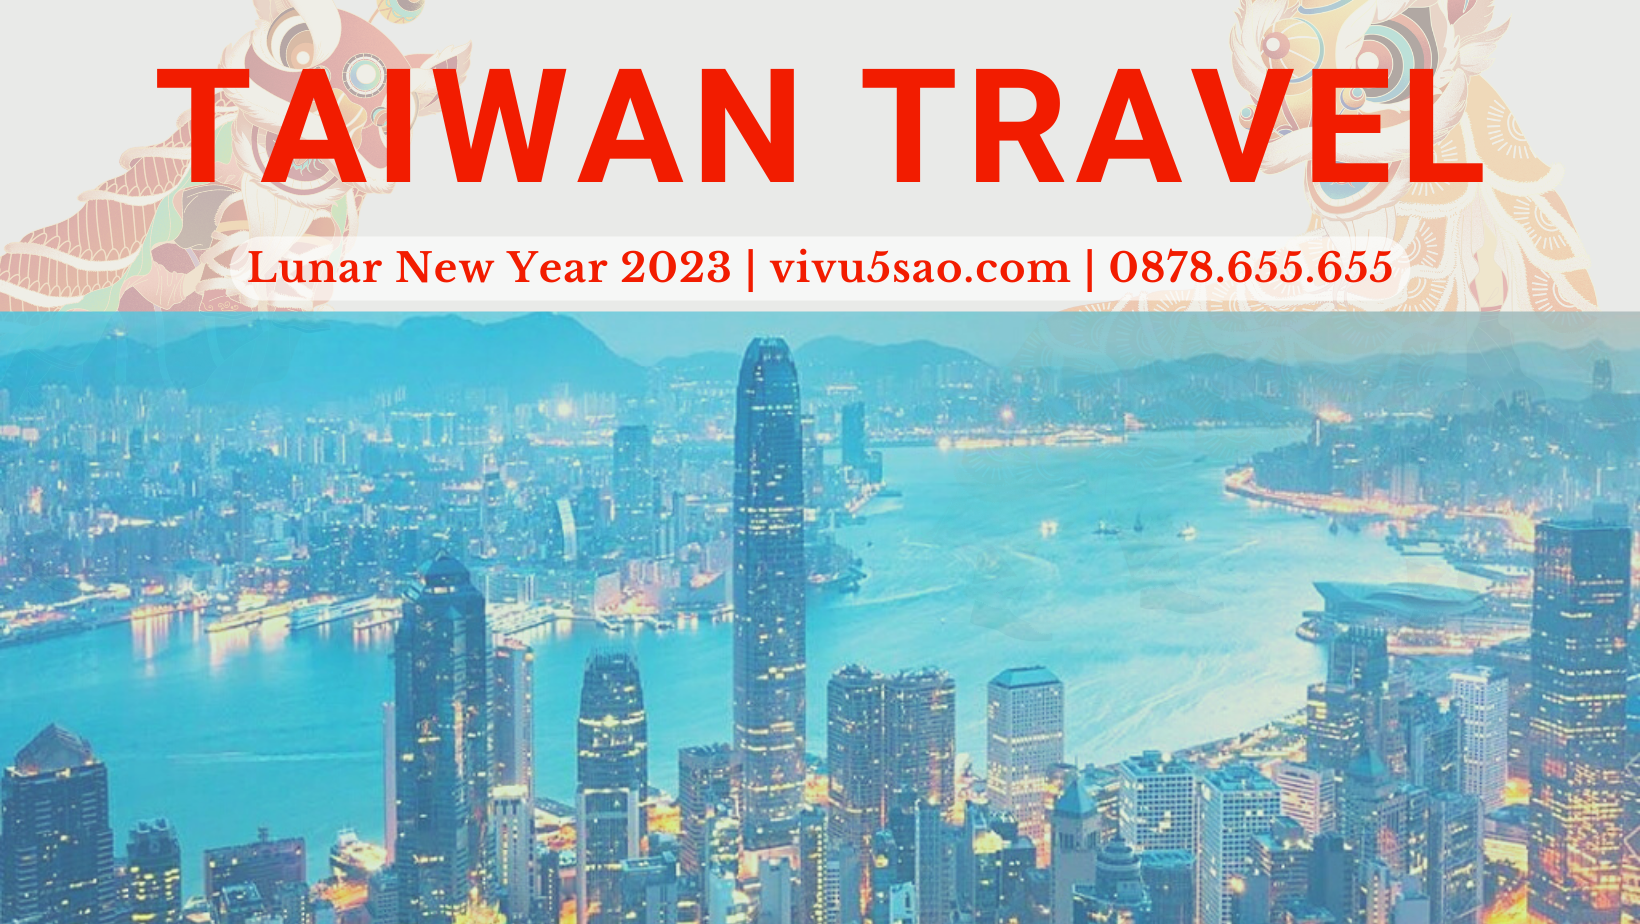 TAIWAN TRAVEL